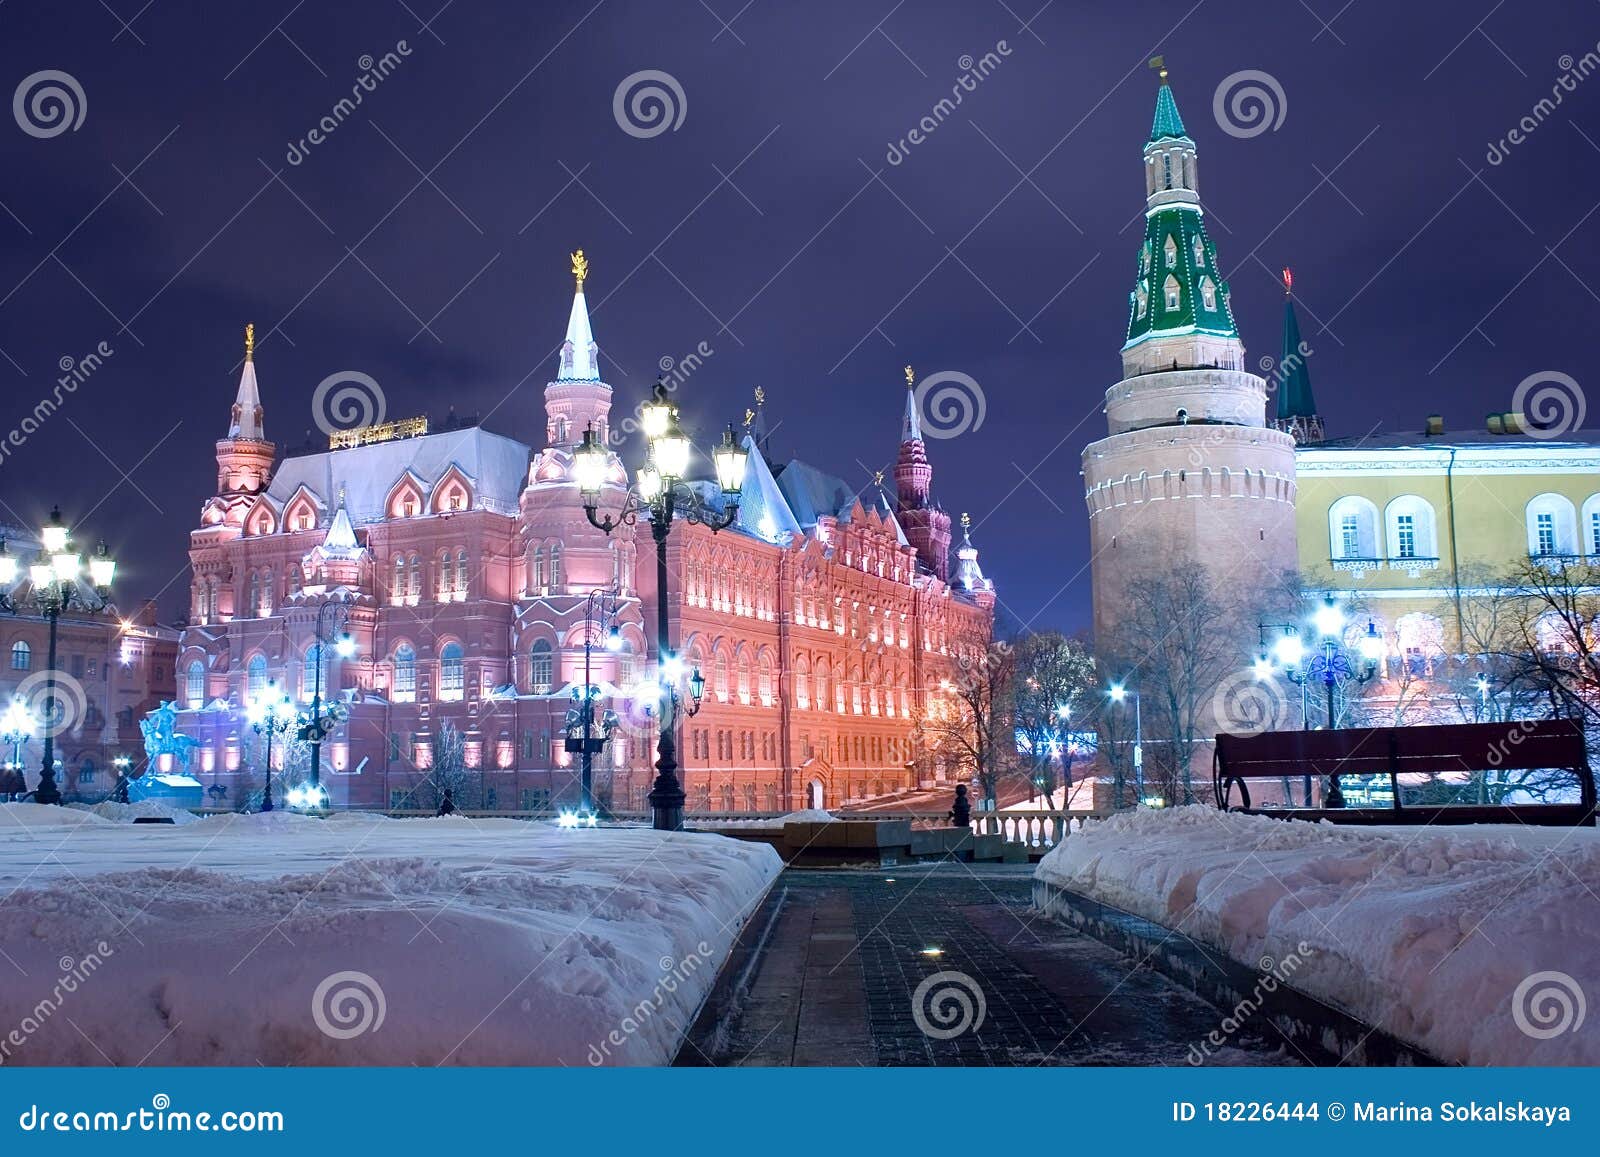 moscow night historical landmark